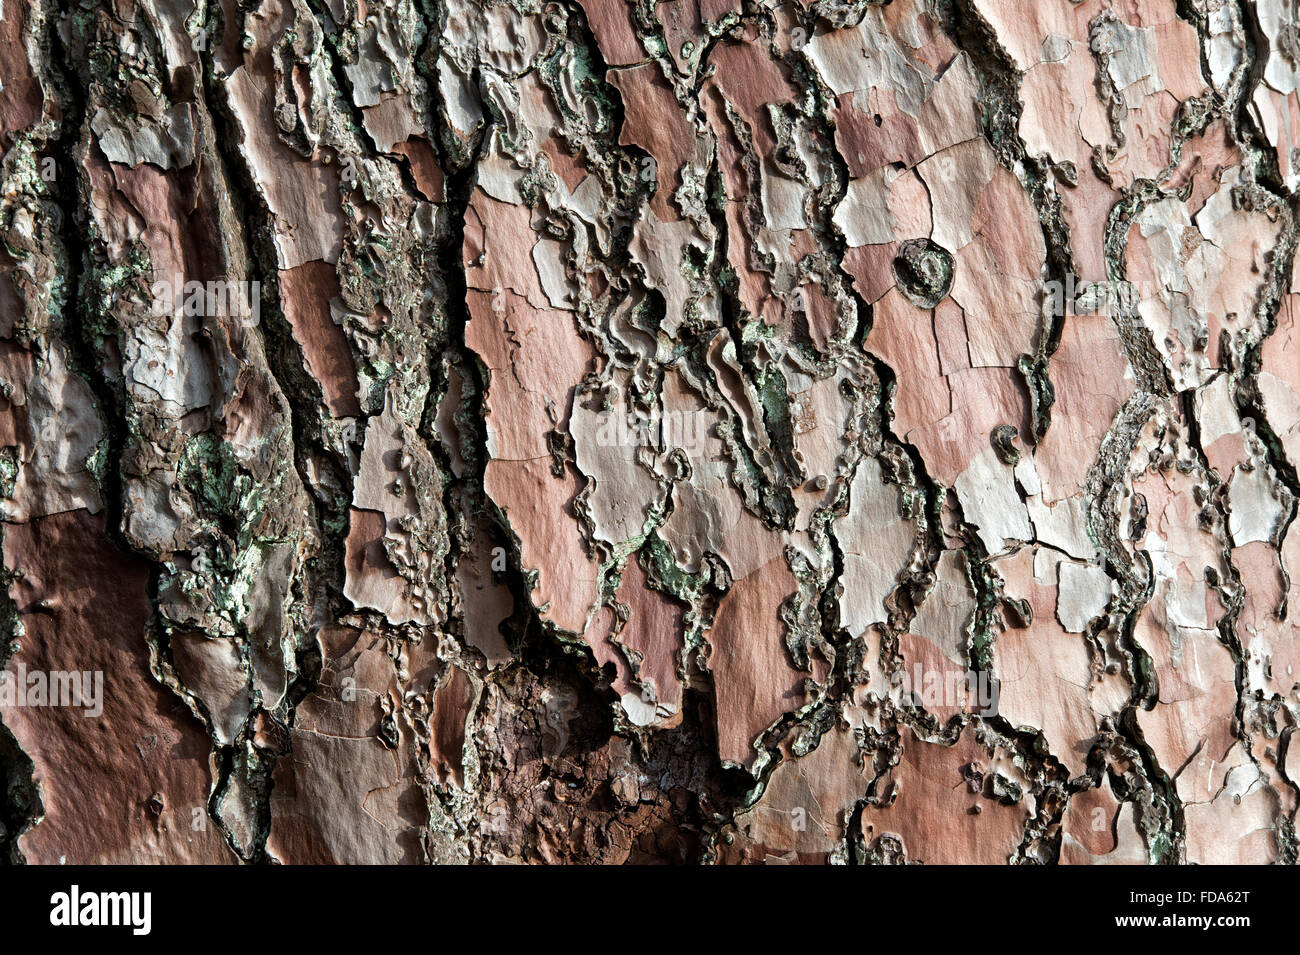 Pinus pinaster. Maritime pine tree bark Stock Photo